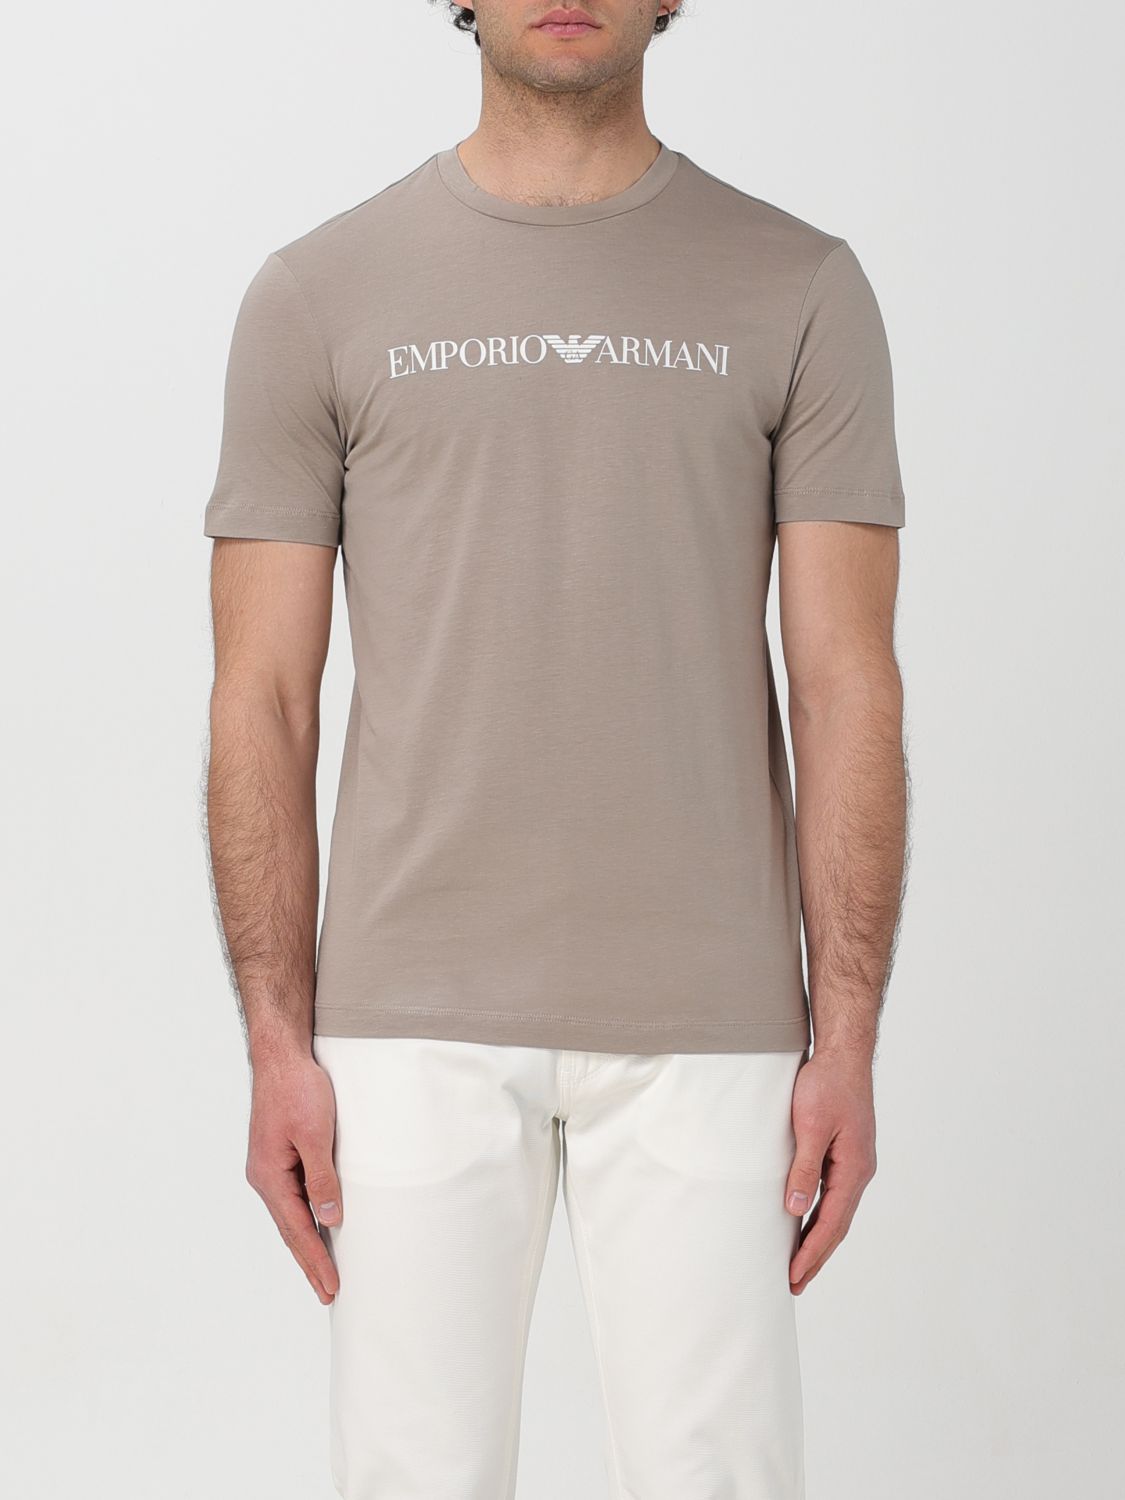 Emporio Armani T-shirt  Men Color Military